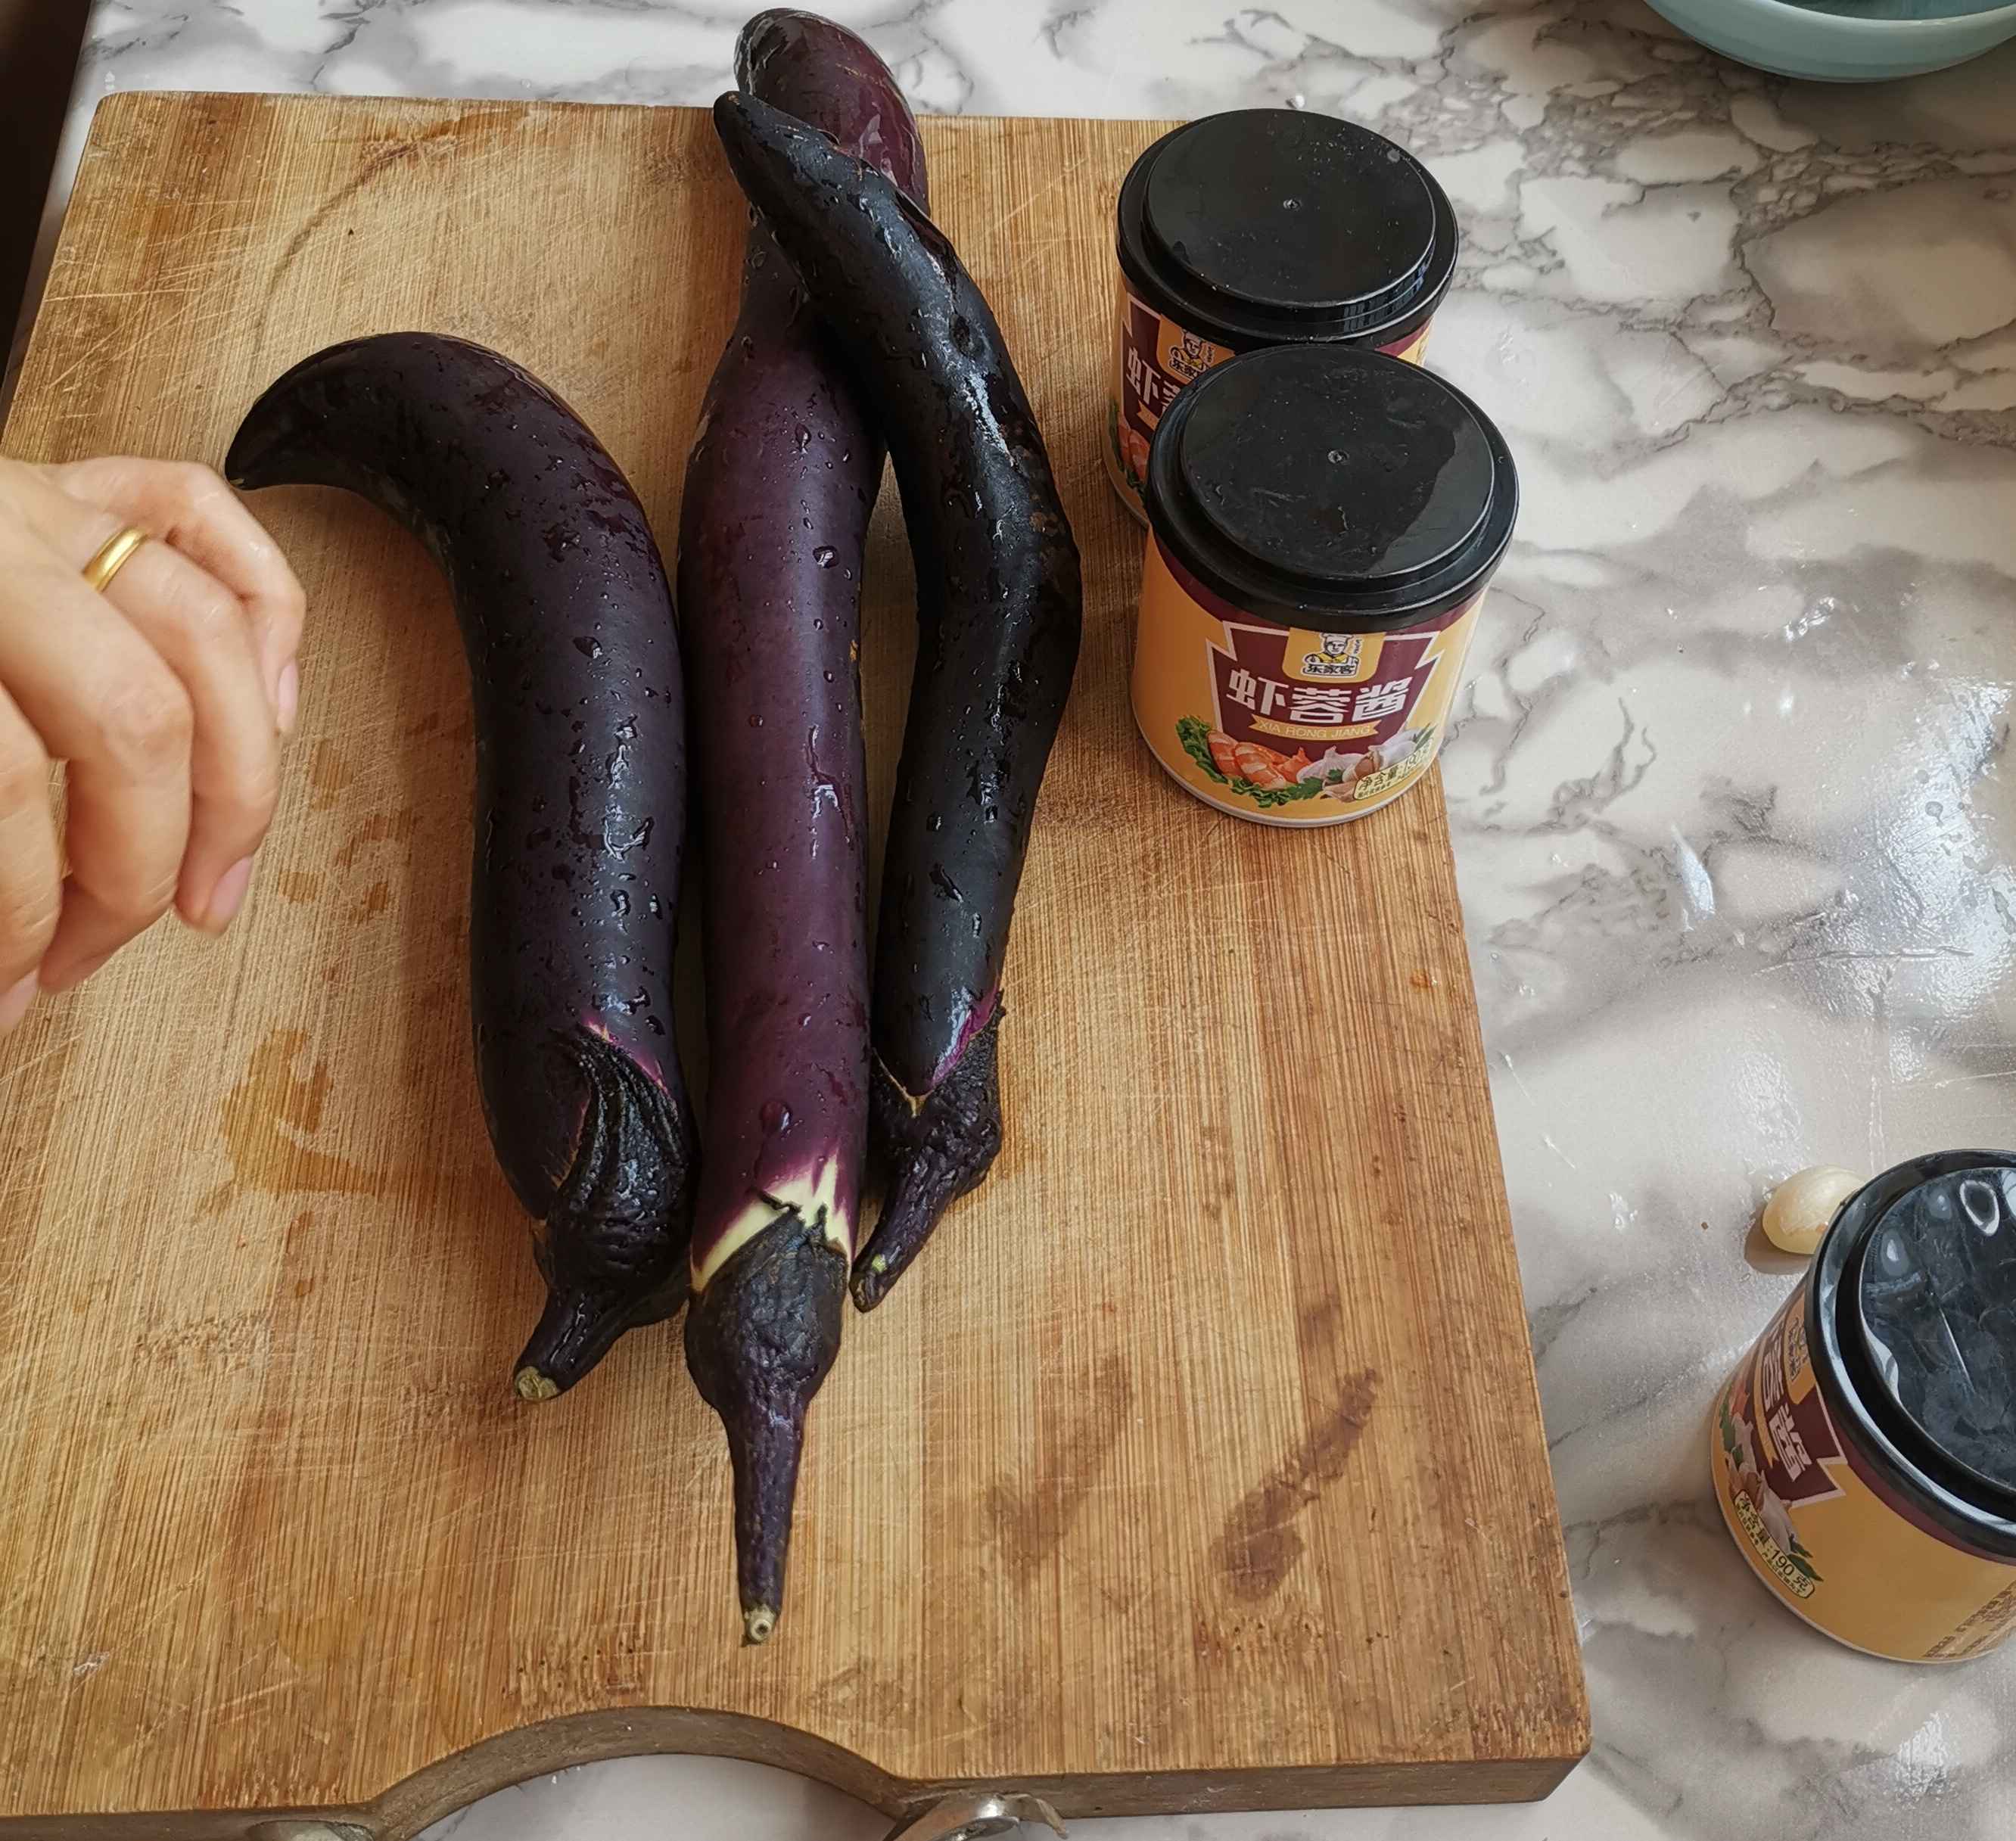 Steamed Eggplant with Shrimp Paste recipe